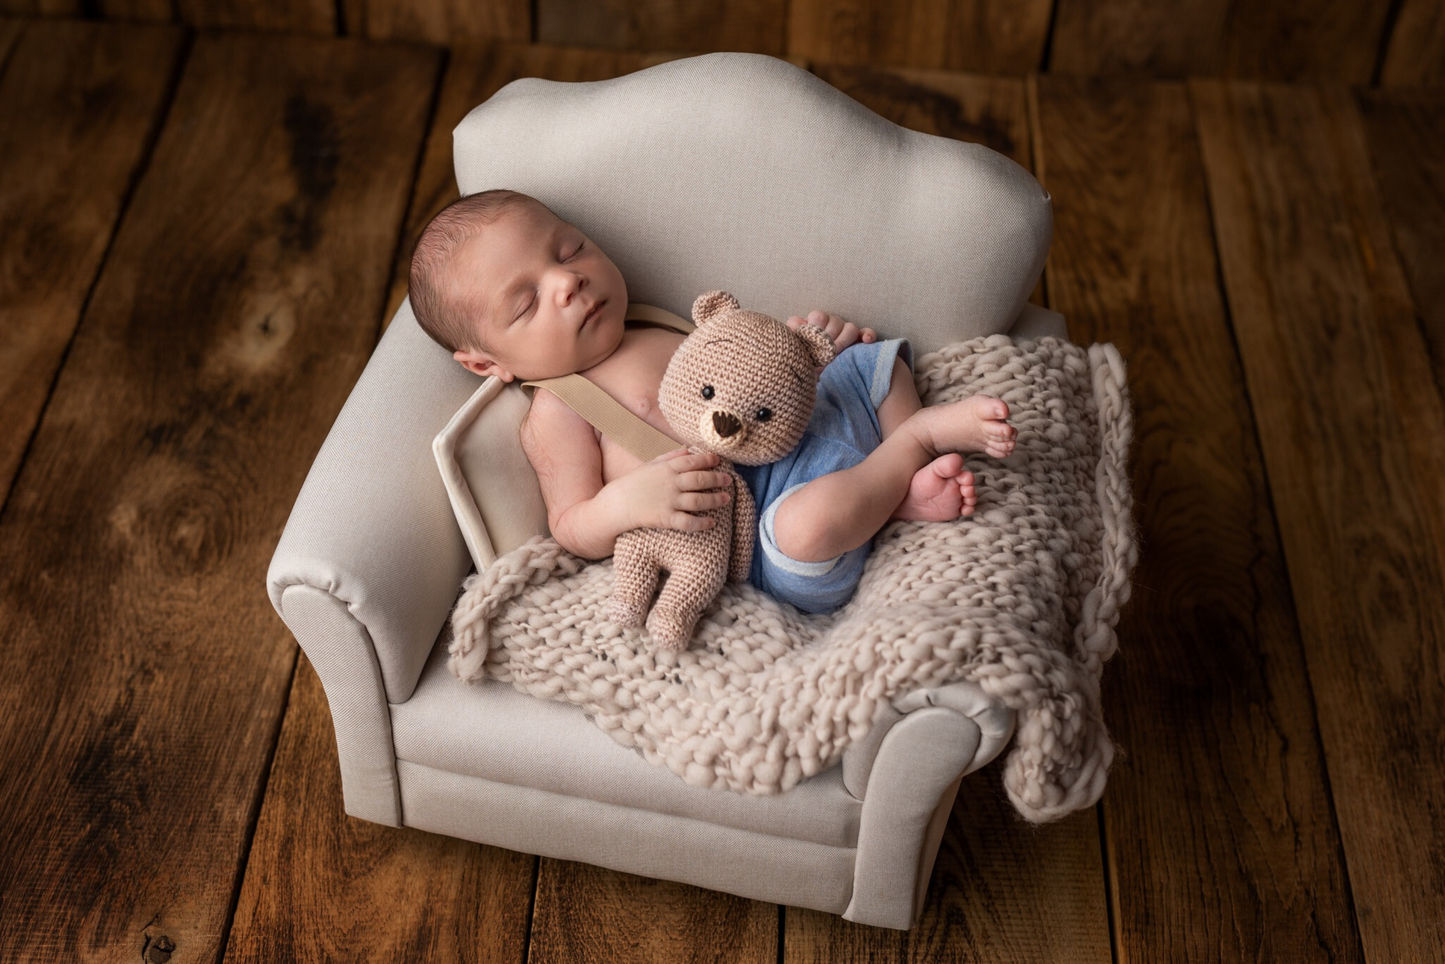 Newborn asleep on a mini sofa with a teddy bear, using a chunky knit blanket as a cozy photography prop.